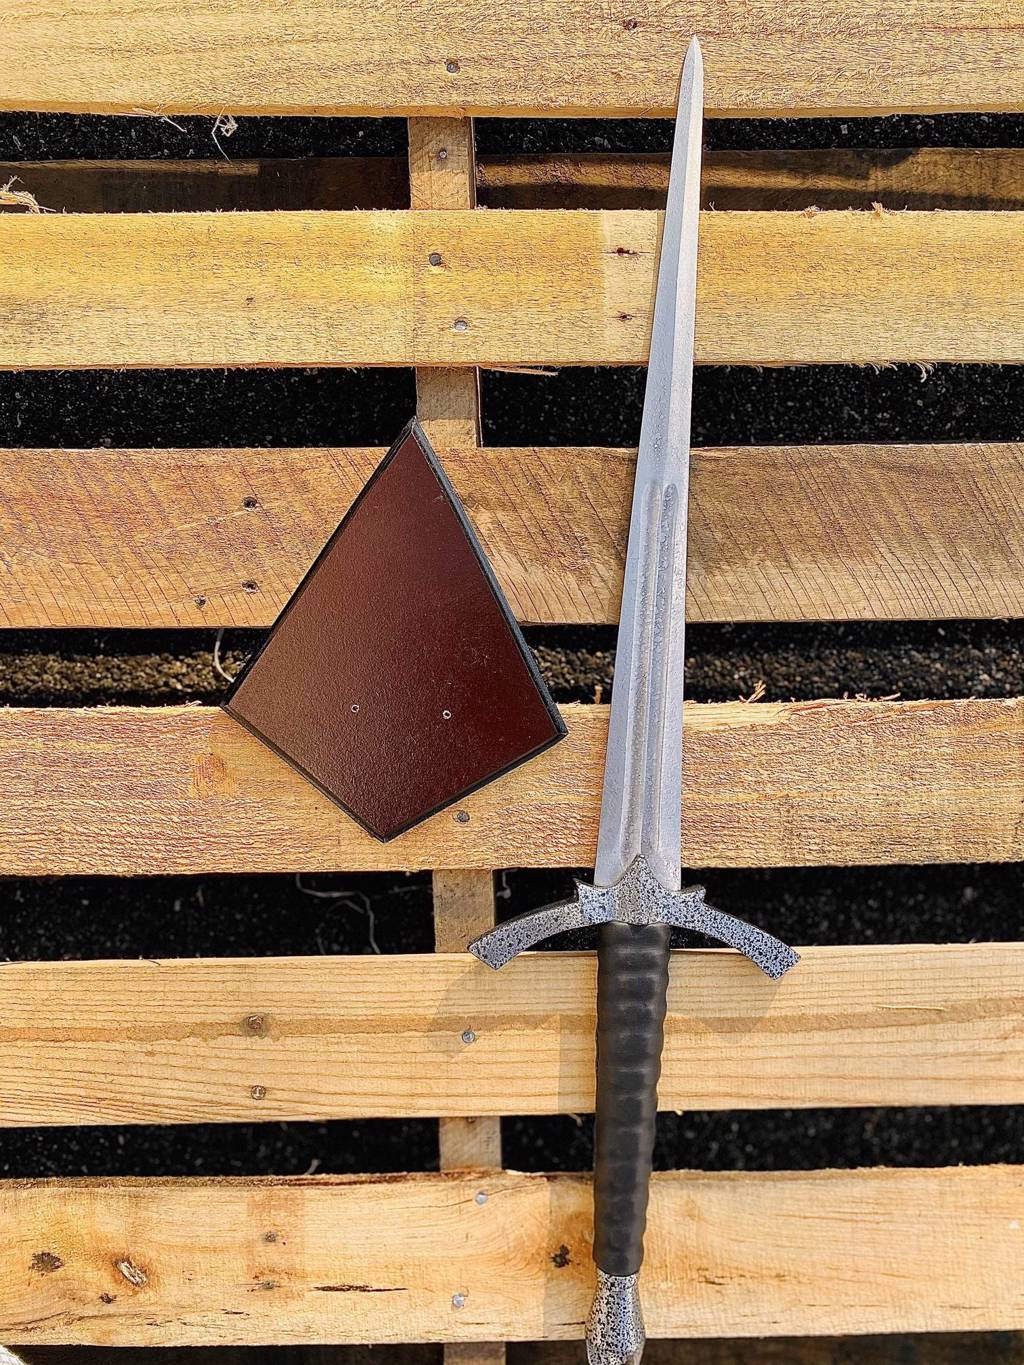 Lotr Morgul Blade of Nazgul Sword for sale hobbit replica dagger